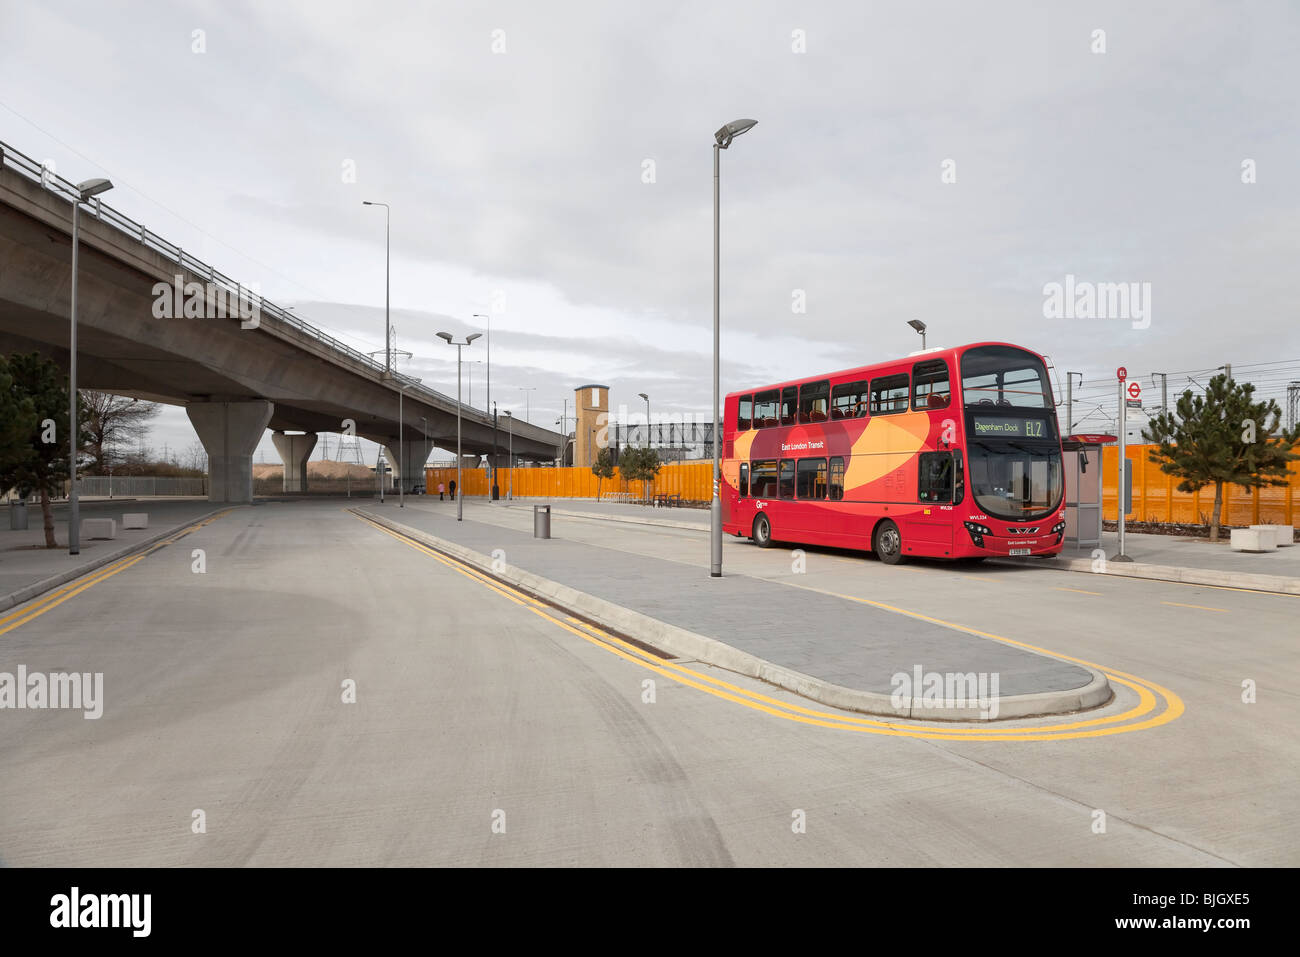 Die neue Dagenham Dock Bus Station East London Transit Stockfoto